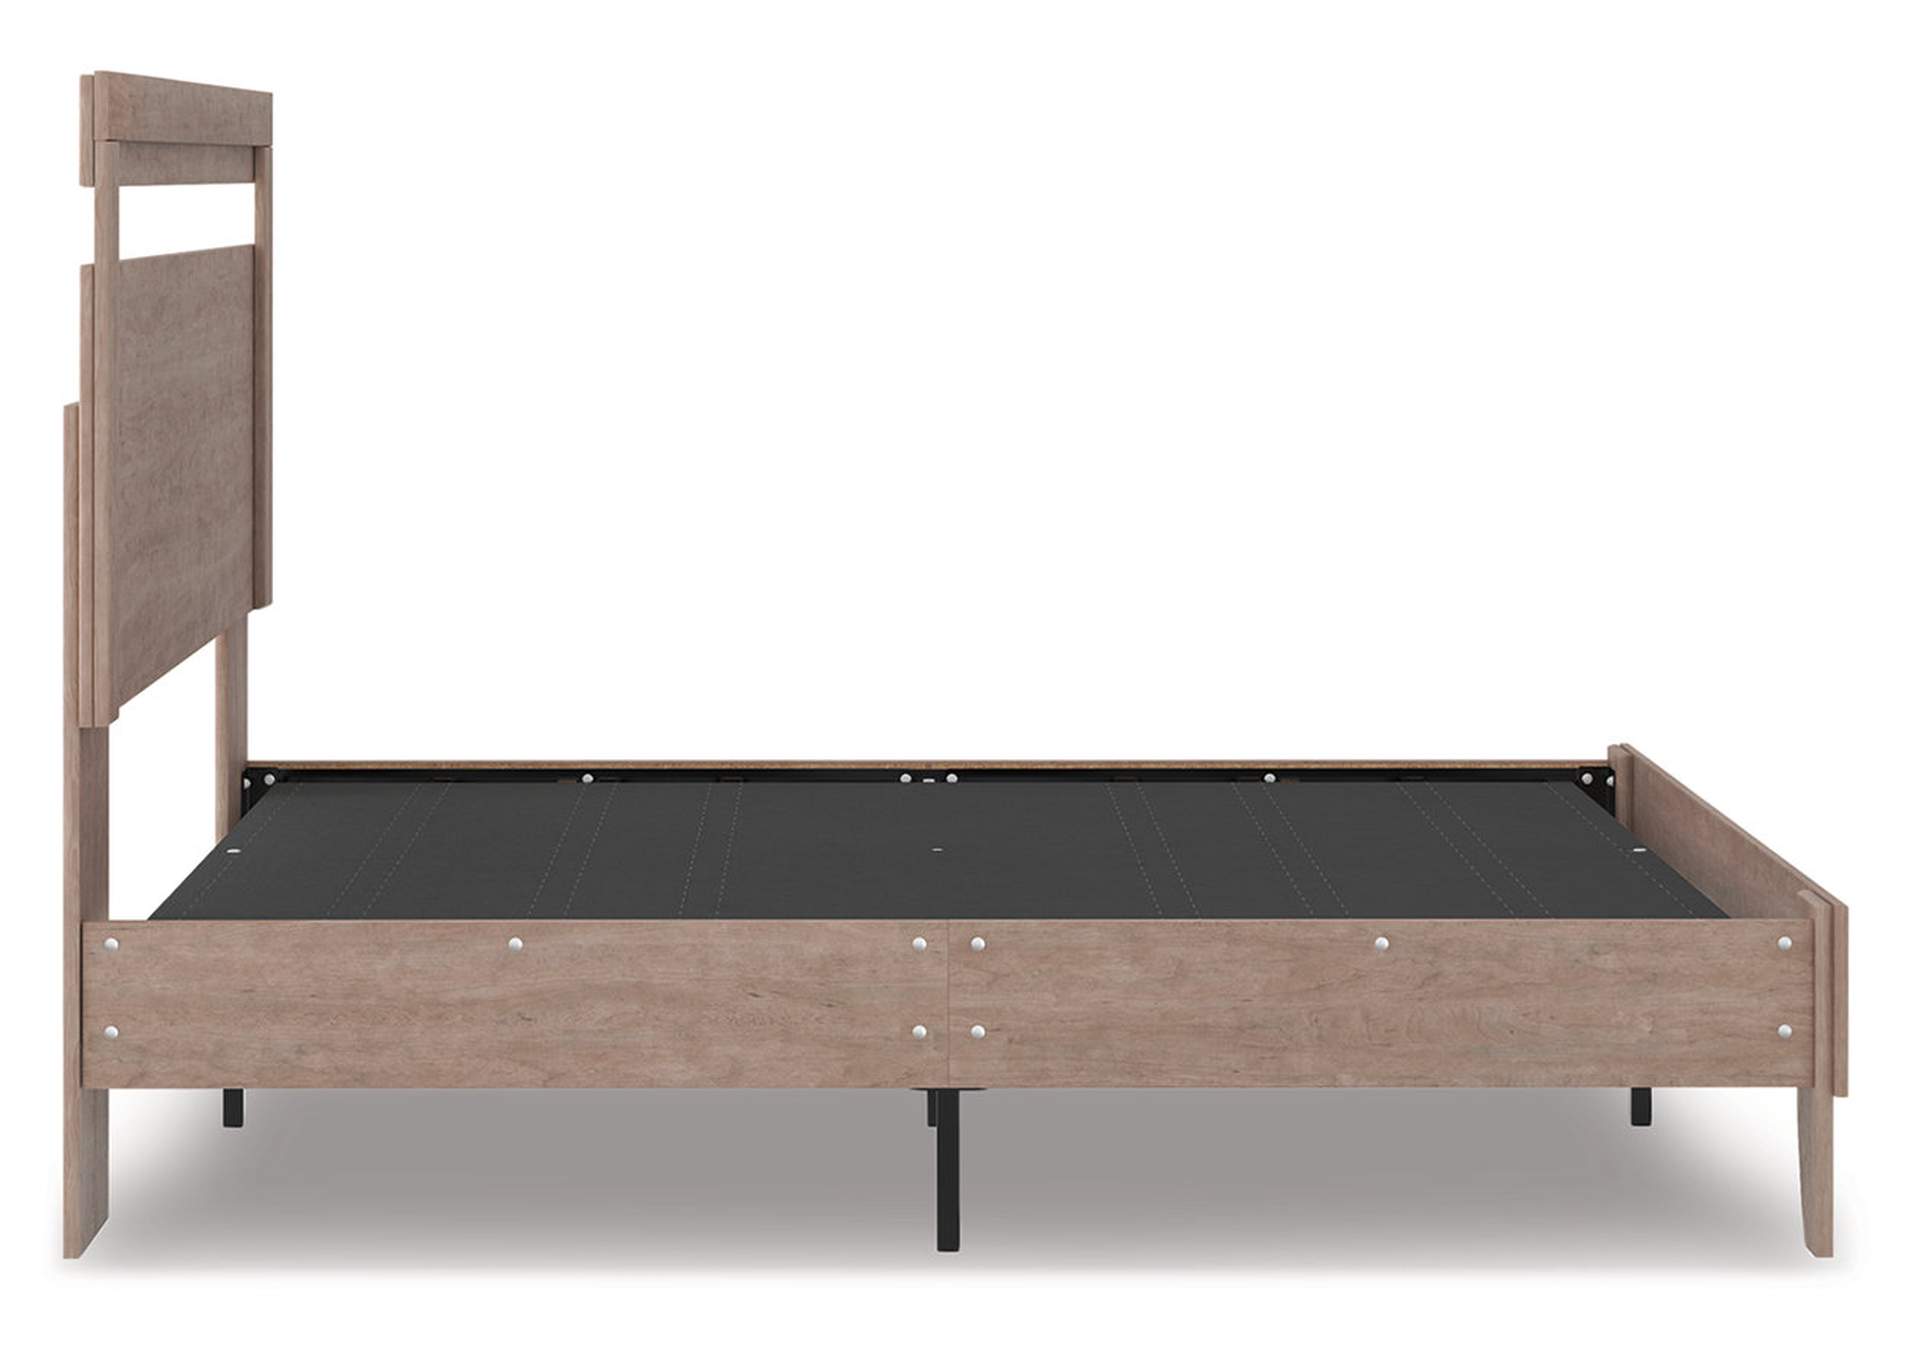 Flannia Full Panel Platform Bed,Signature Design By Ashley